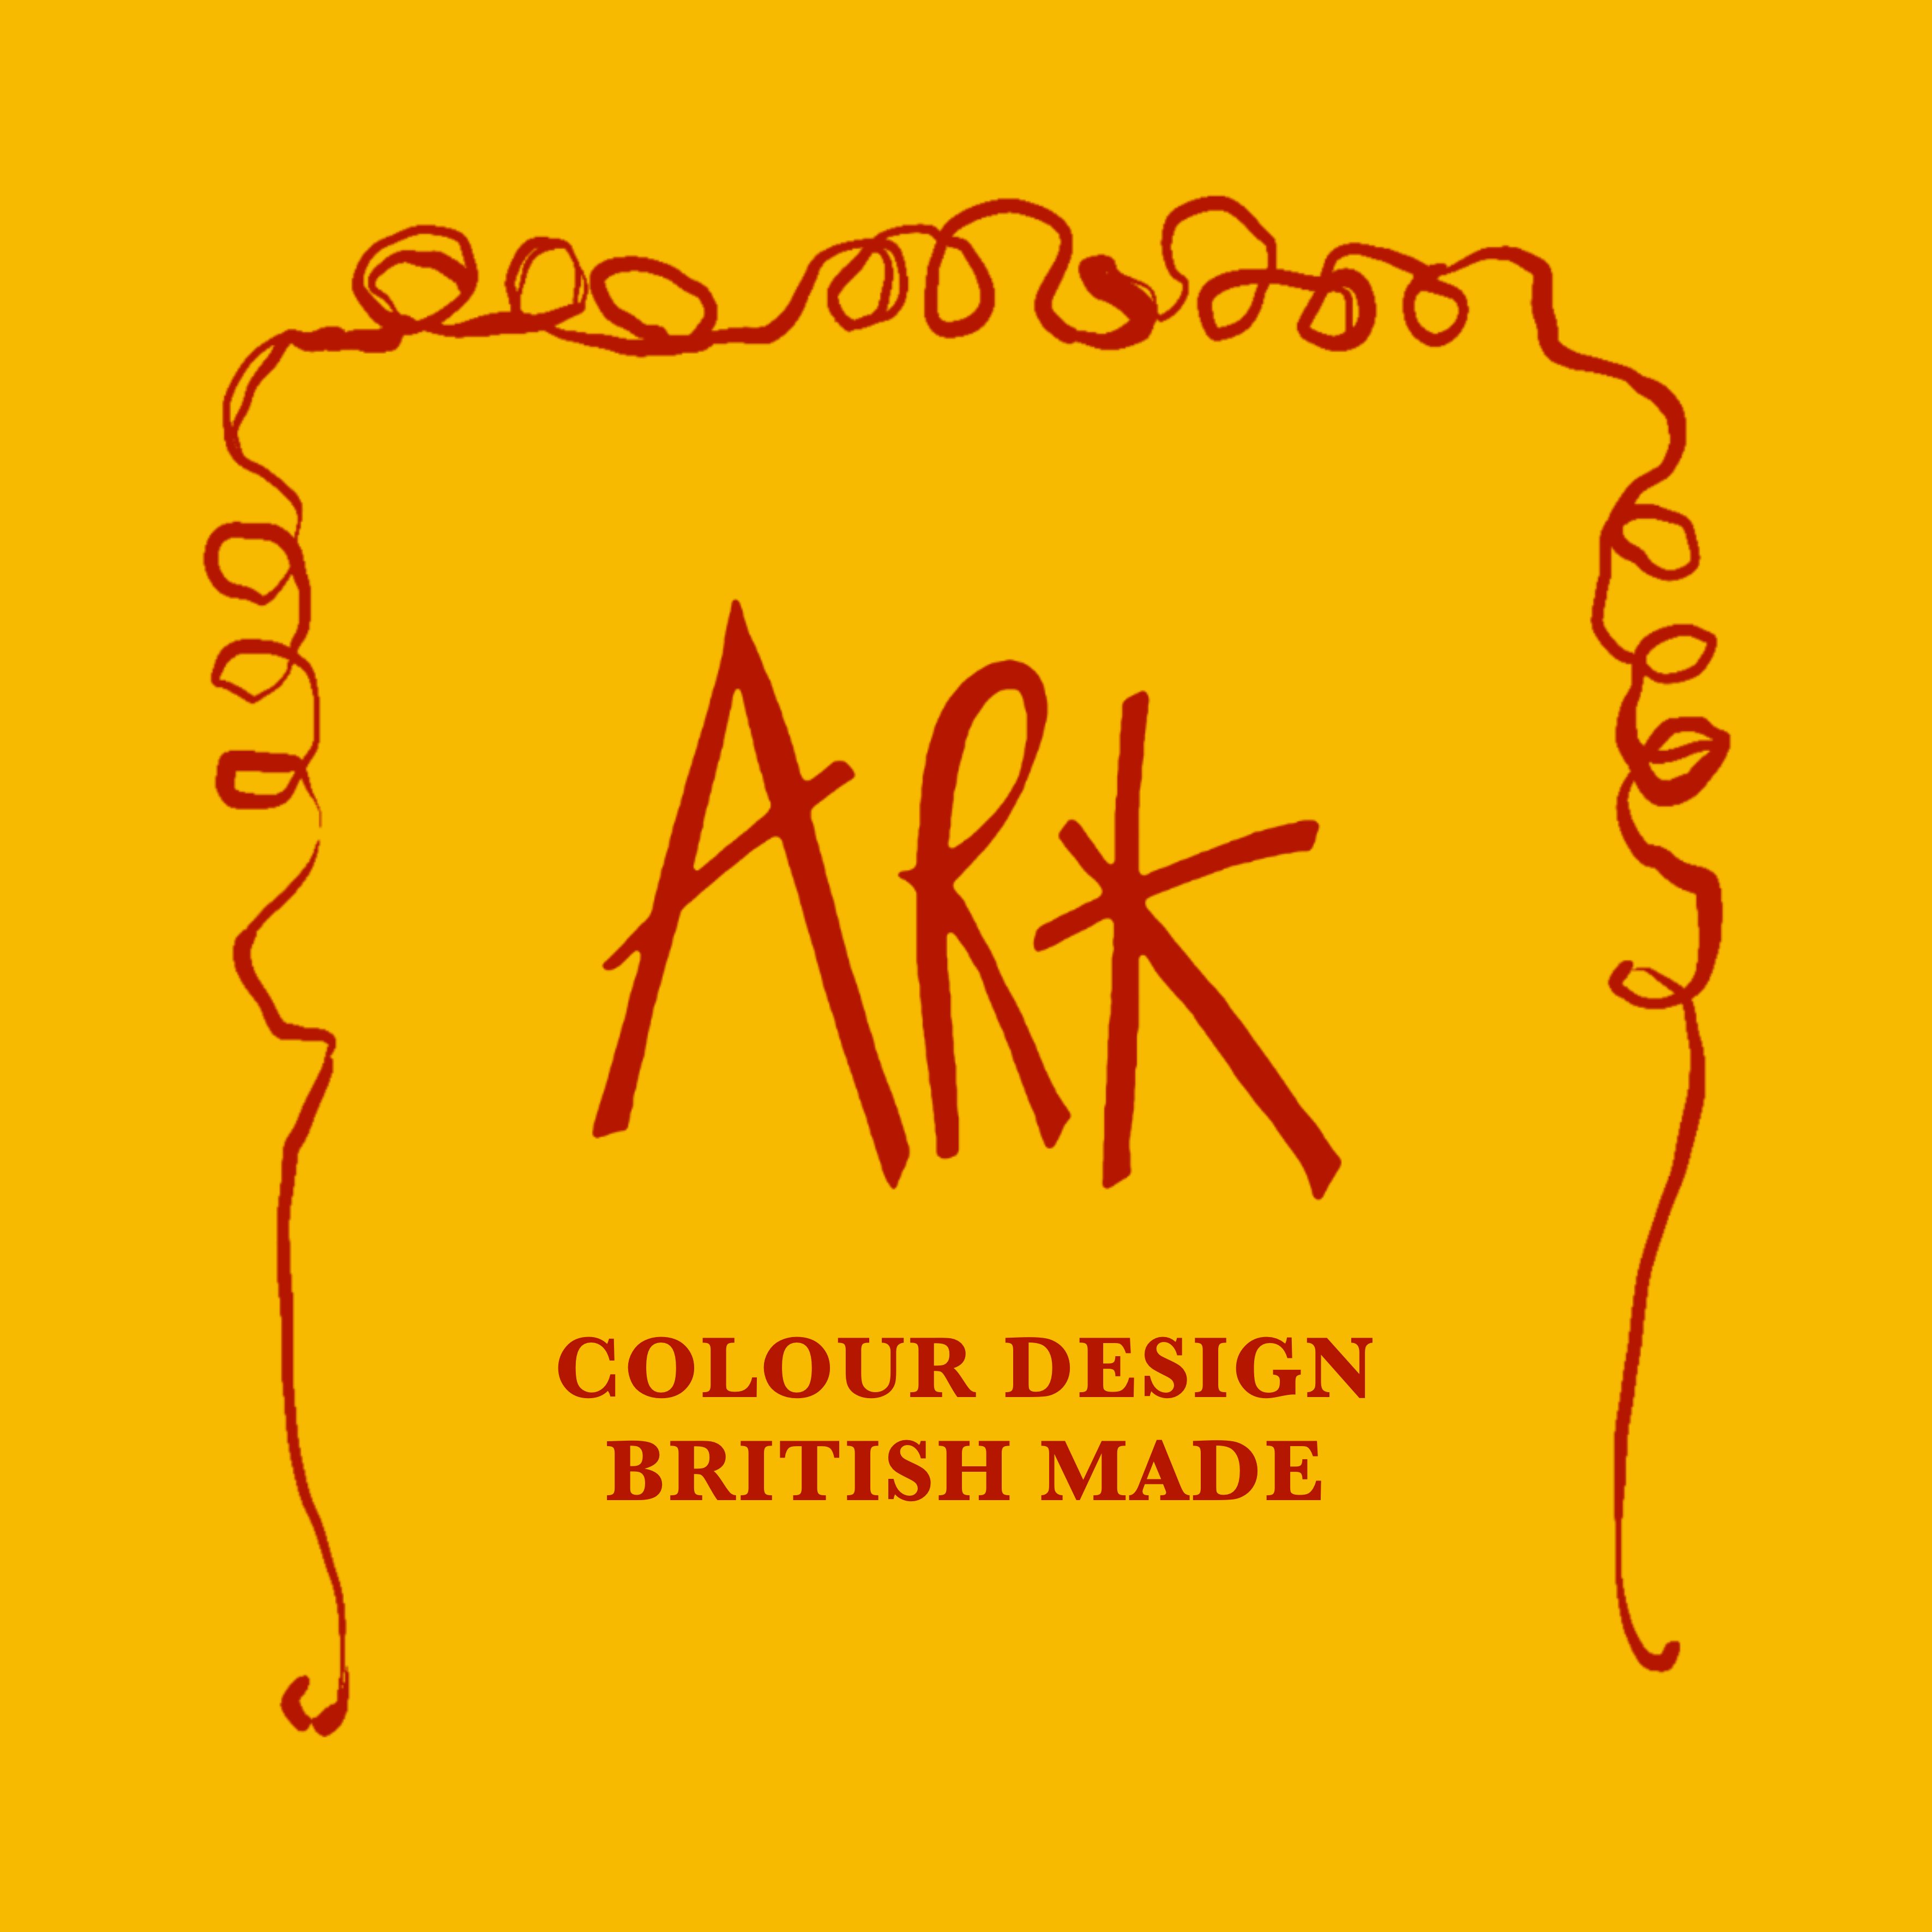 Ark Colour Design - Trade